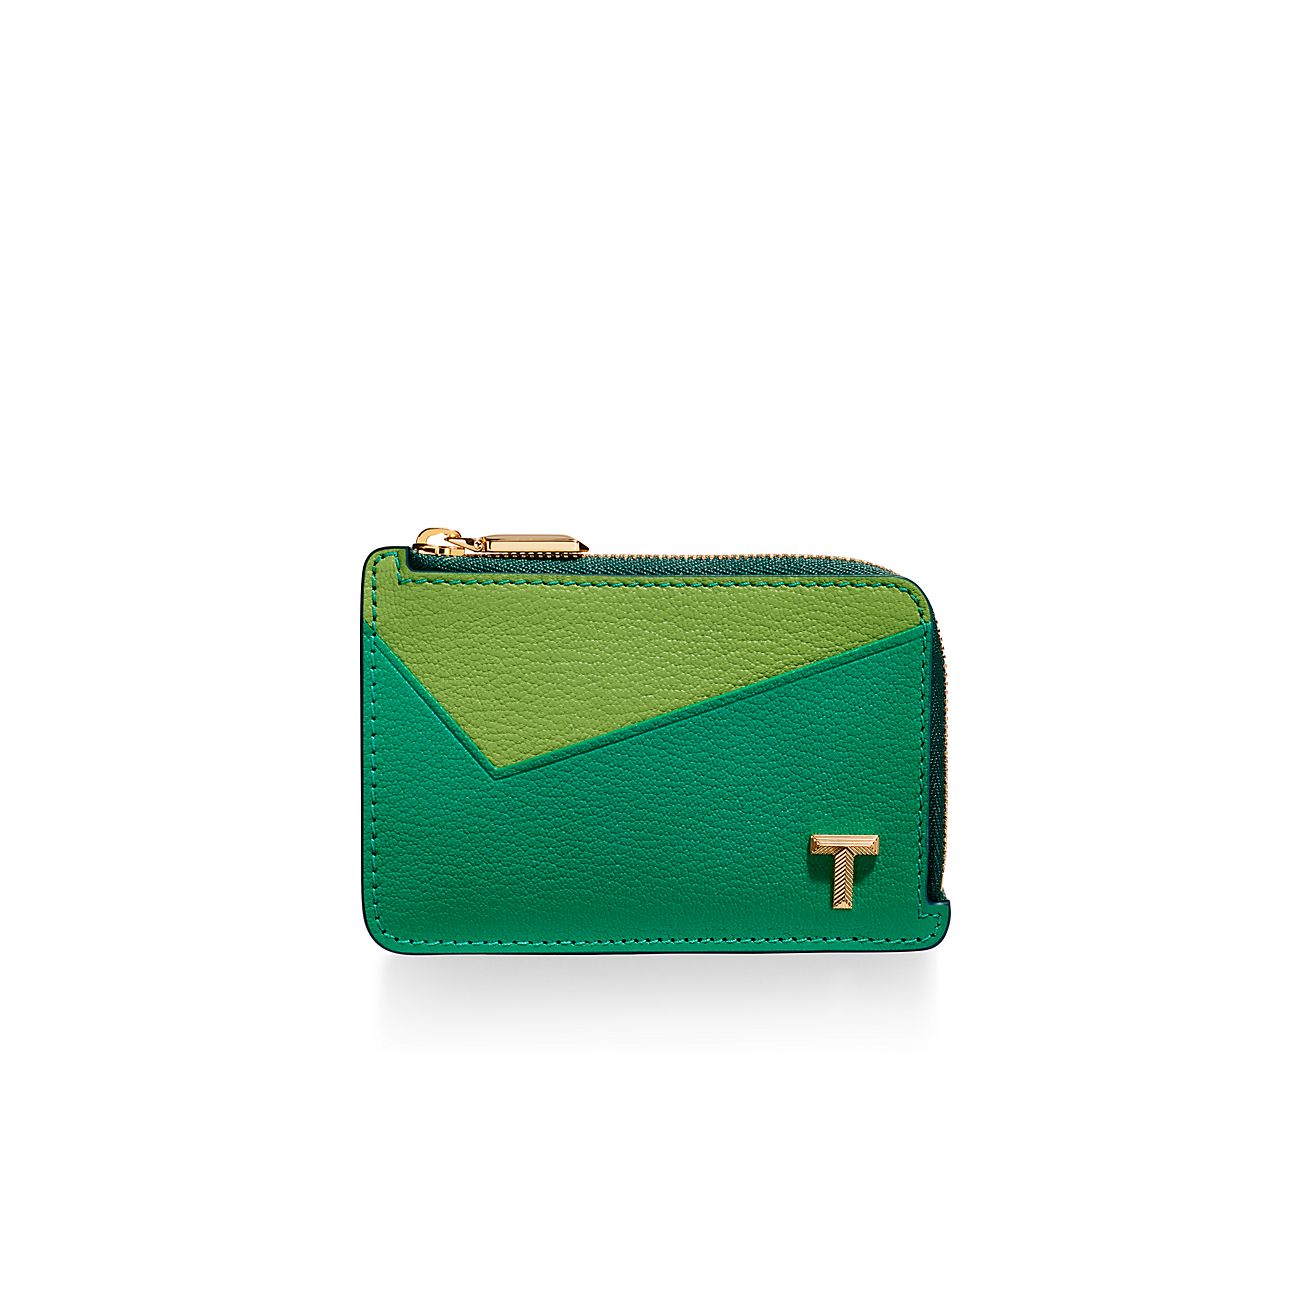 Tiffany T Zip Card Case in Emerald Green colourblock Leather